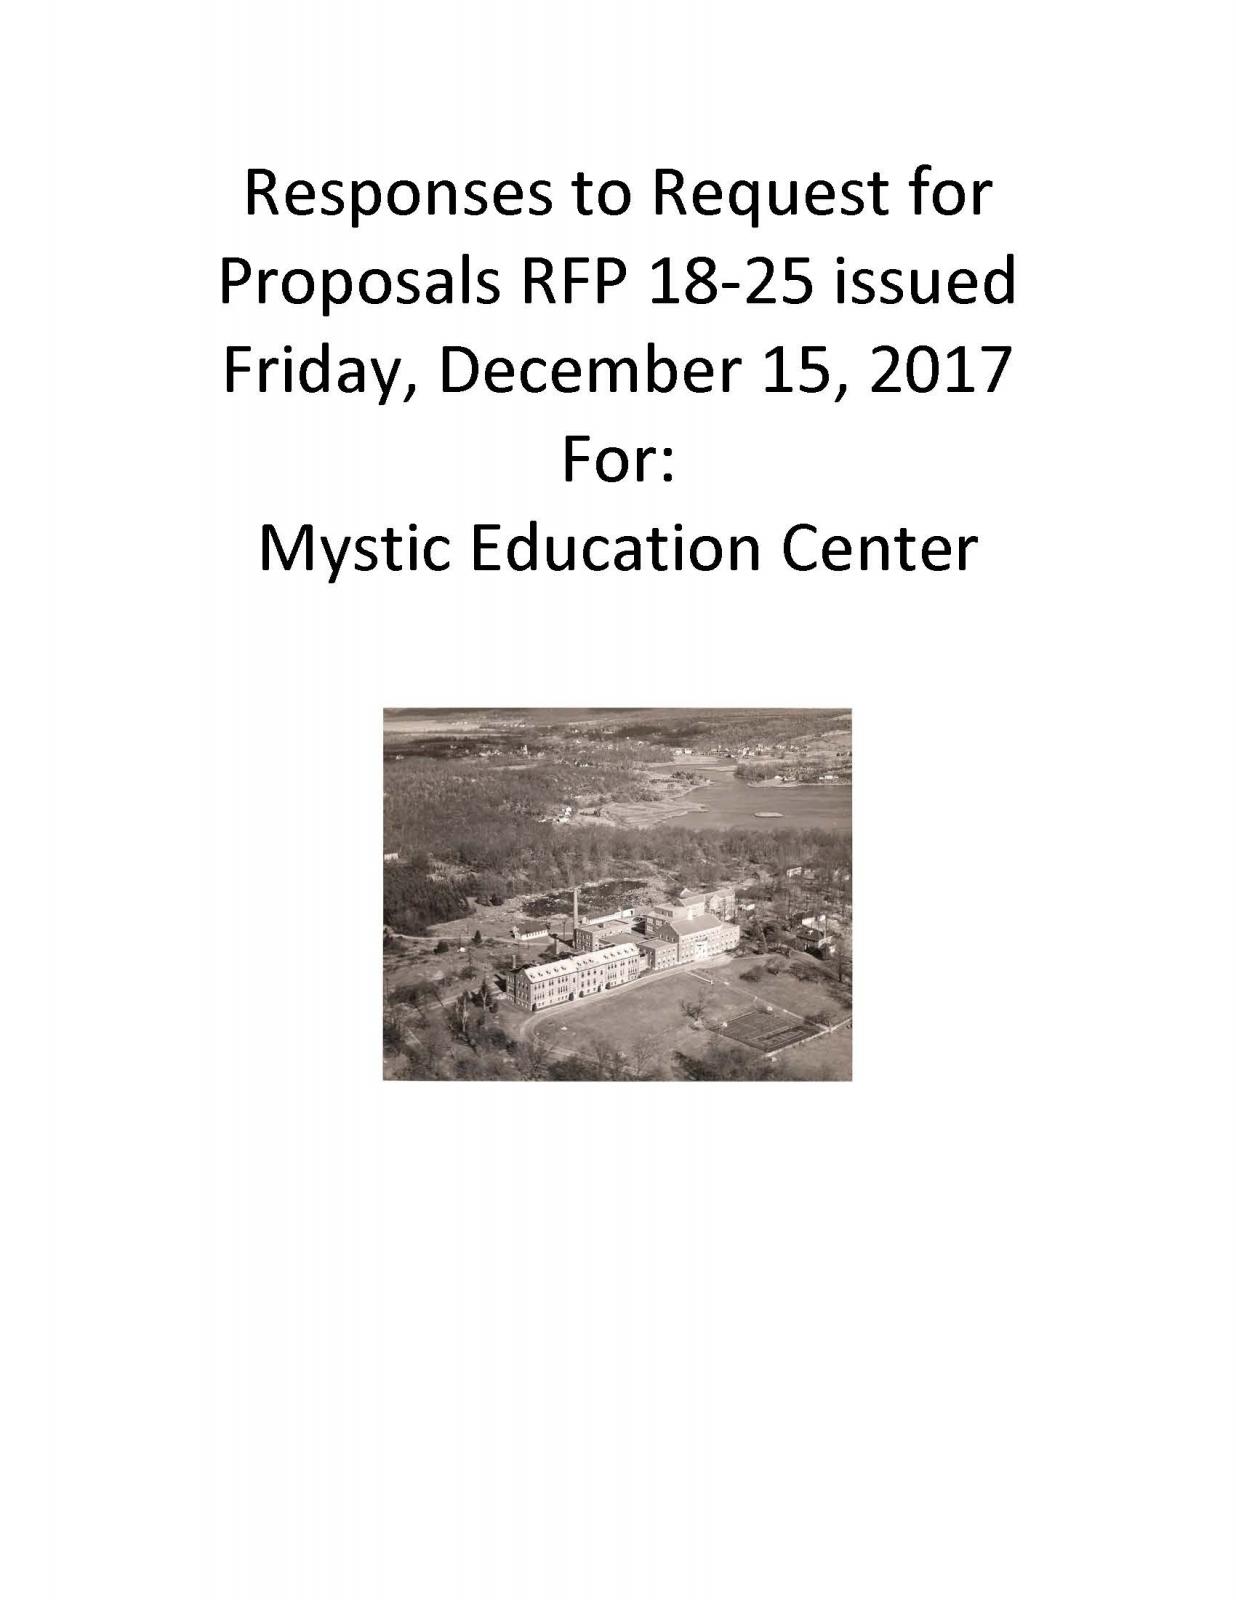 Thumbnail for Mystic Education Center RFP Responses